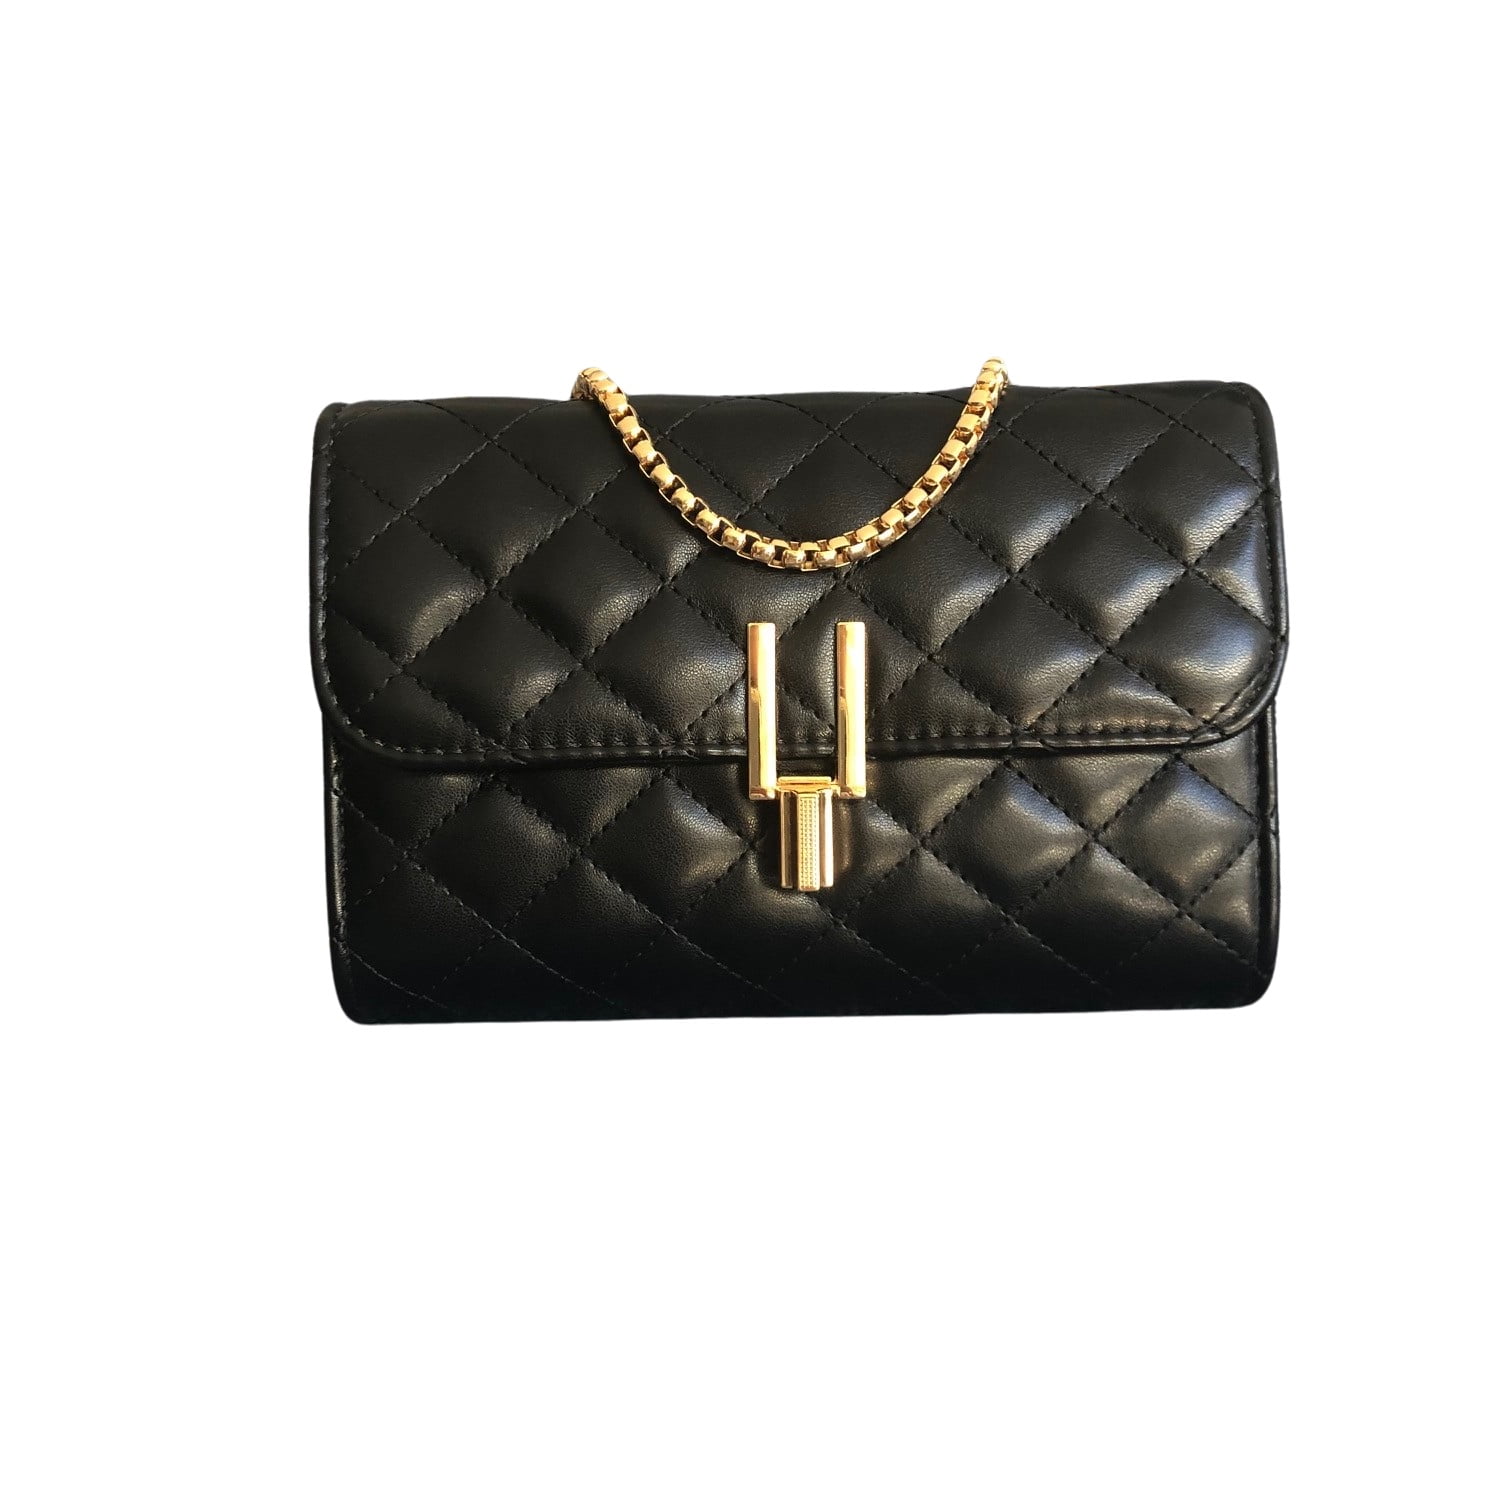 chanel small black crossbody purse